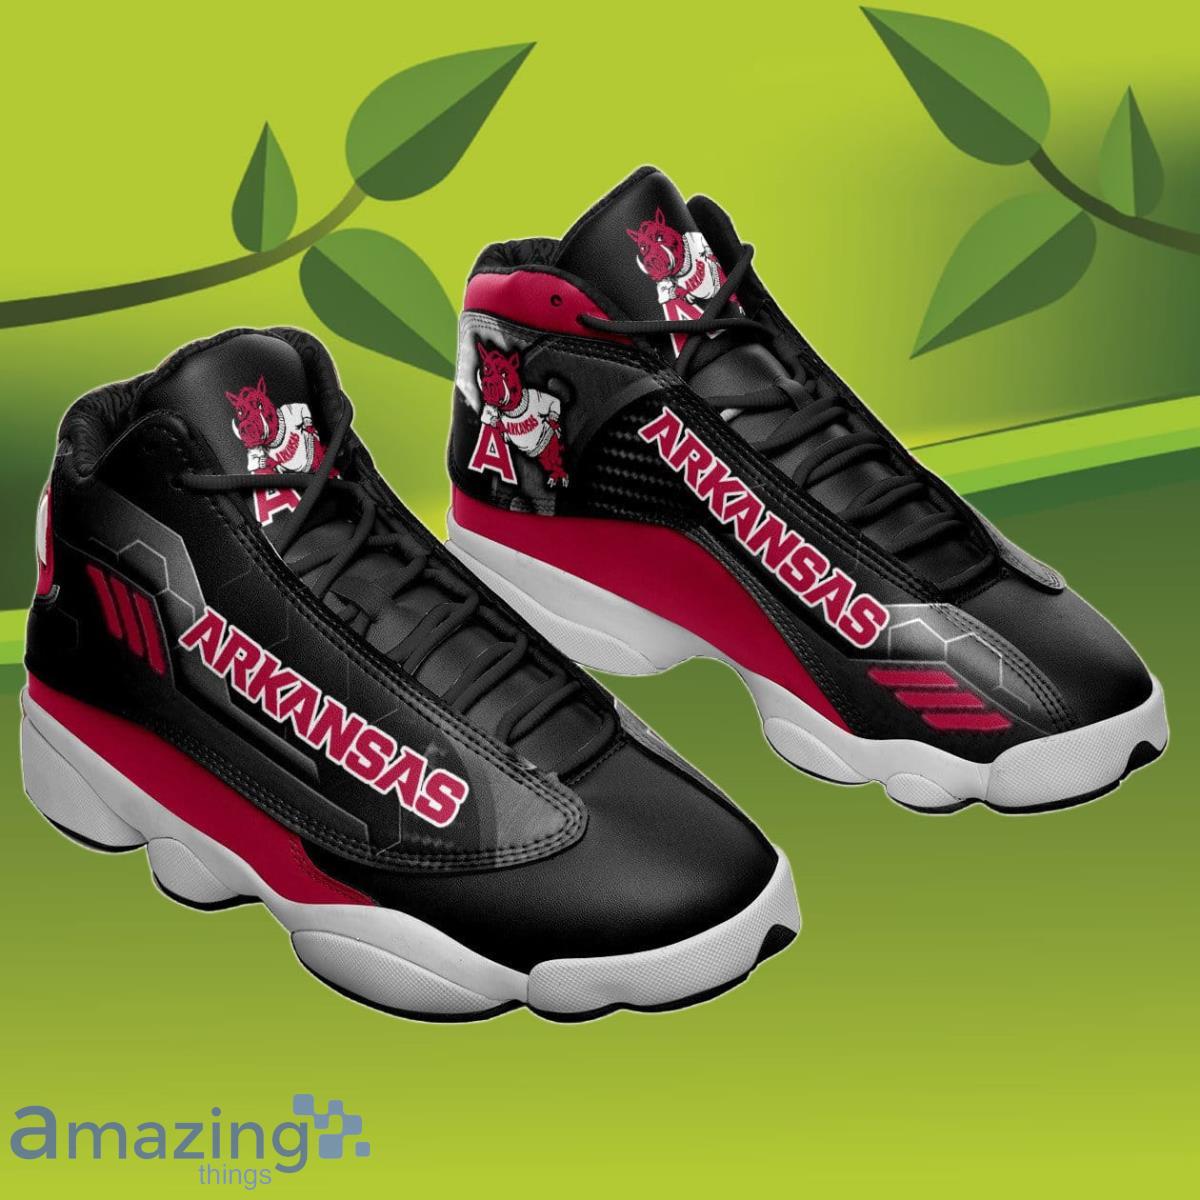 Arkansas Razorbacks Air Jordan 13 Sneakers Best Gift For Men And Women Product Photo 1